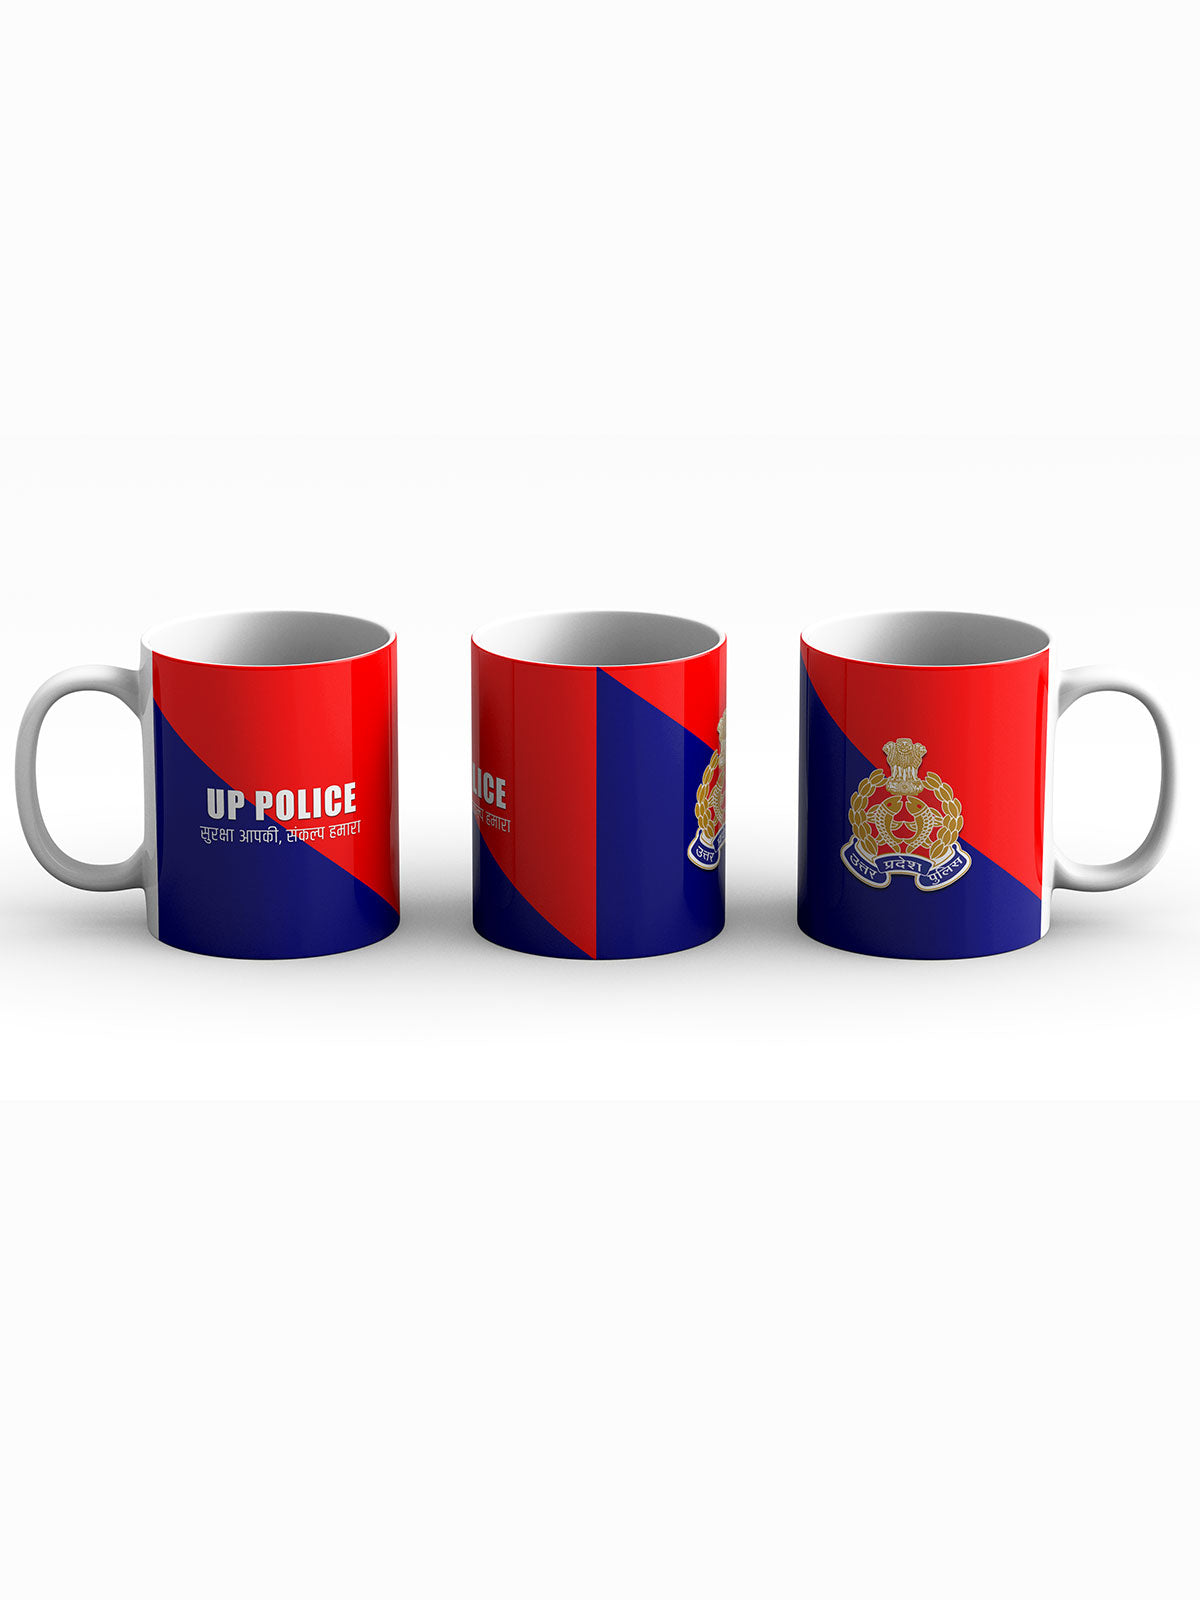 UP Police Mug